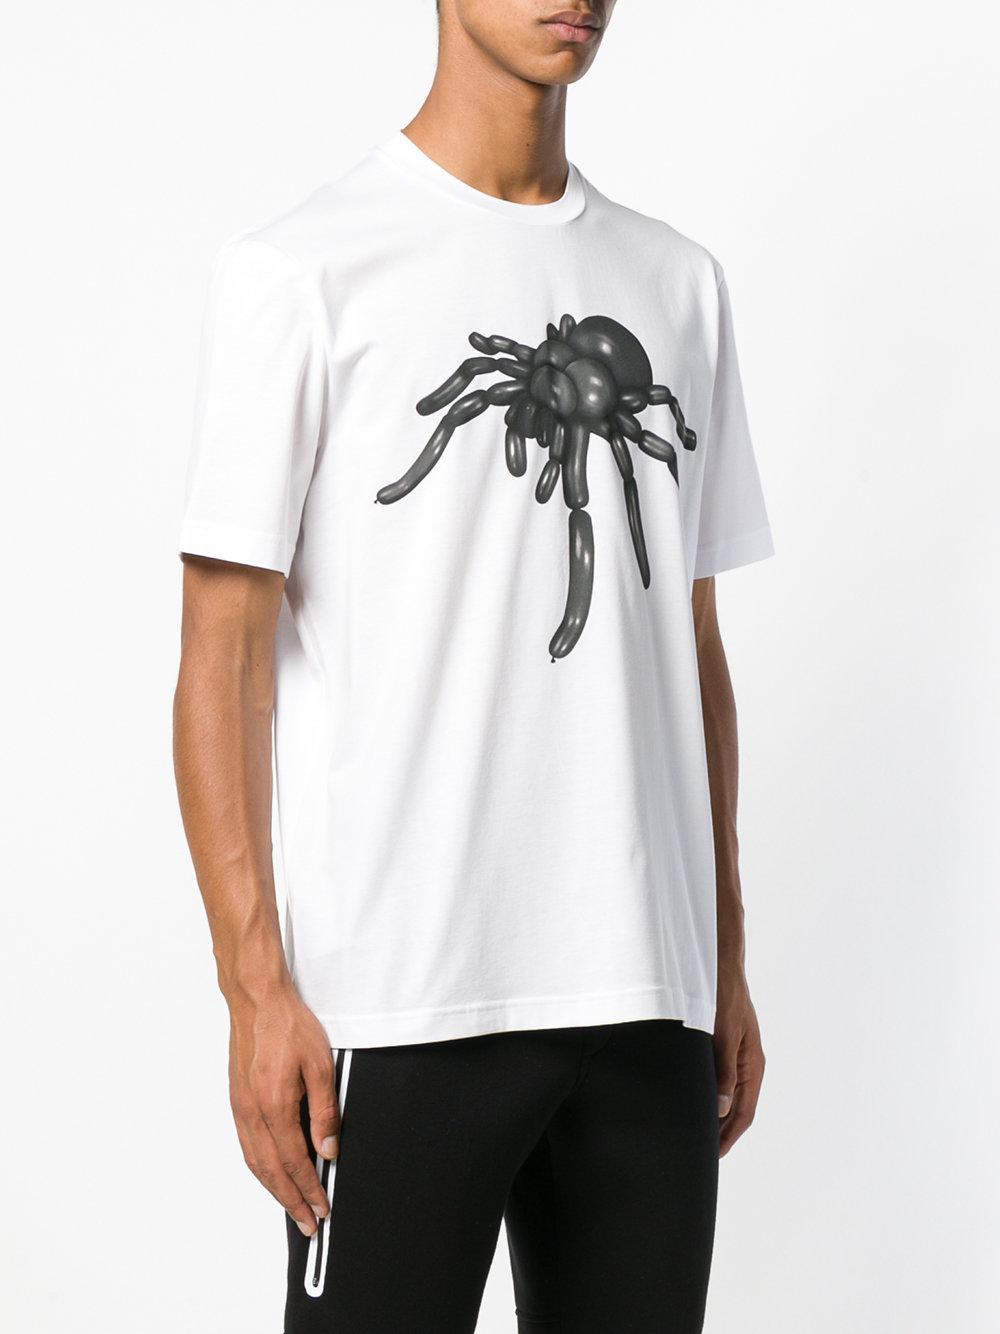 Neil Barrett Cotton Tarantula Graphic T-shirt in White for Men - Lyst